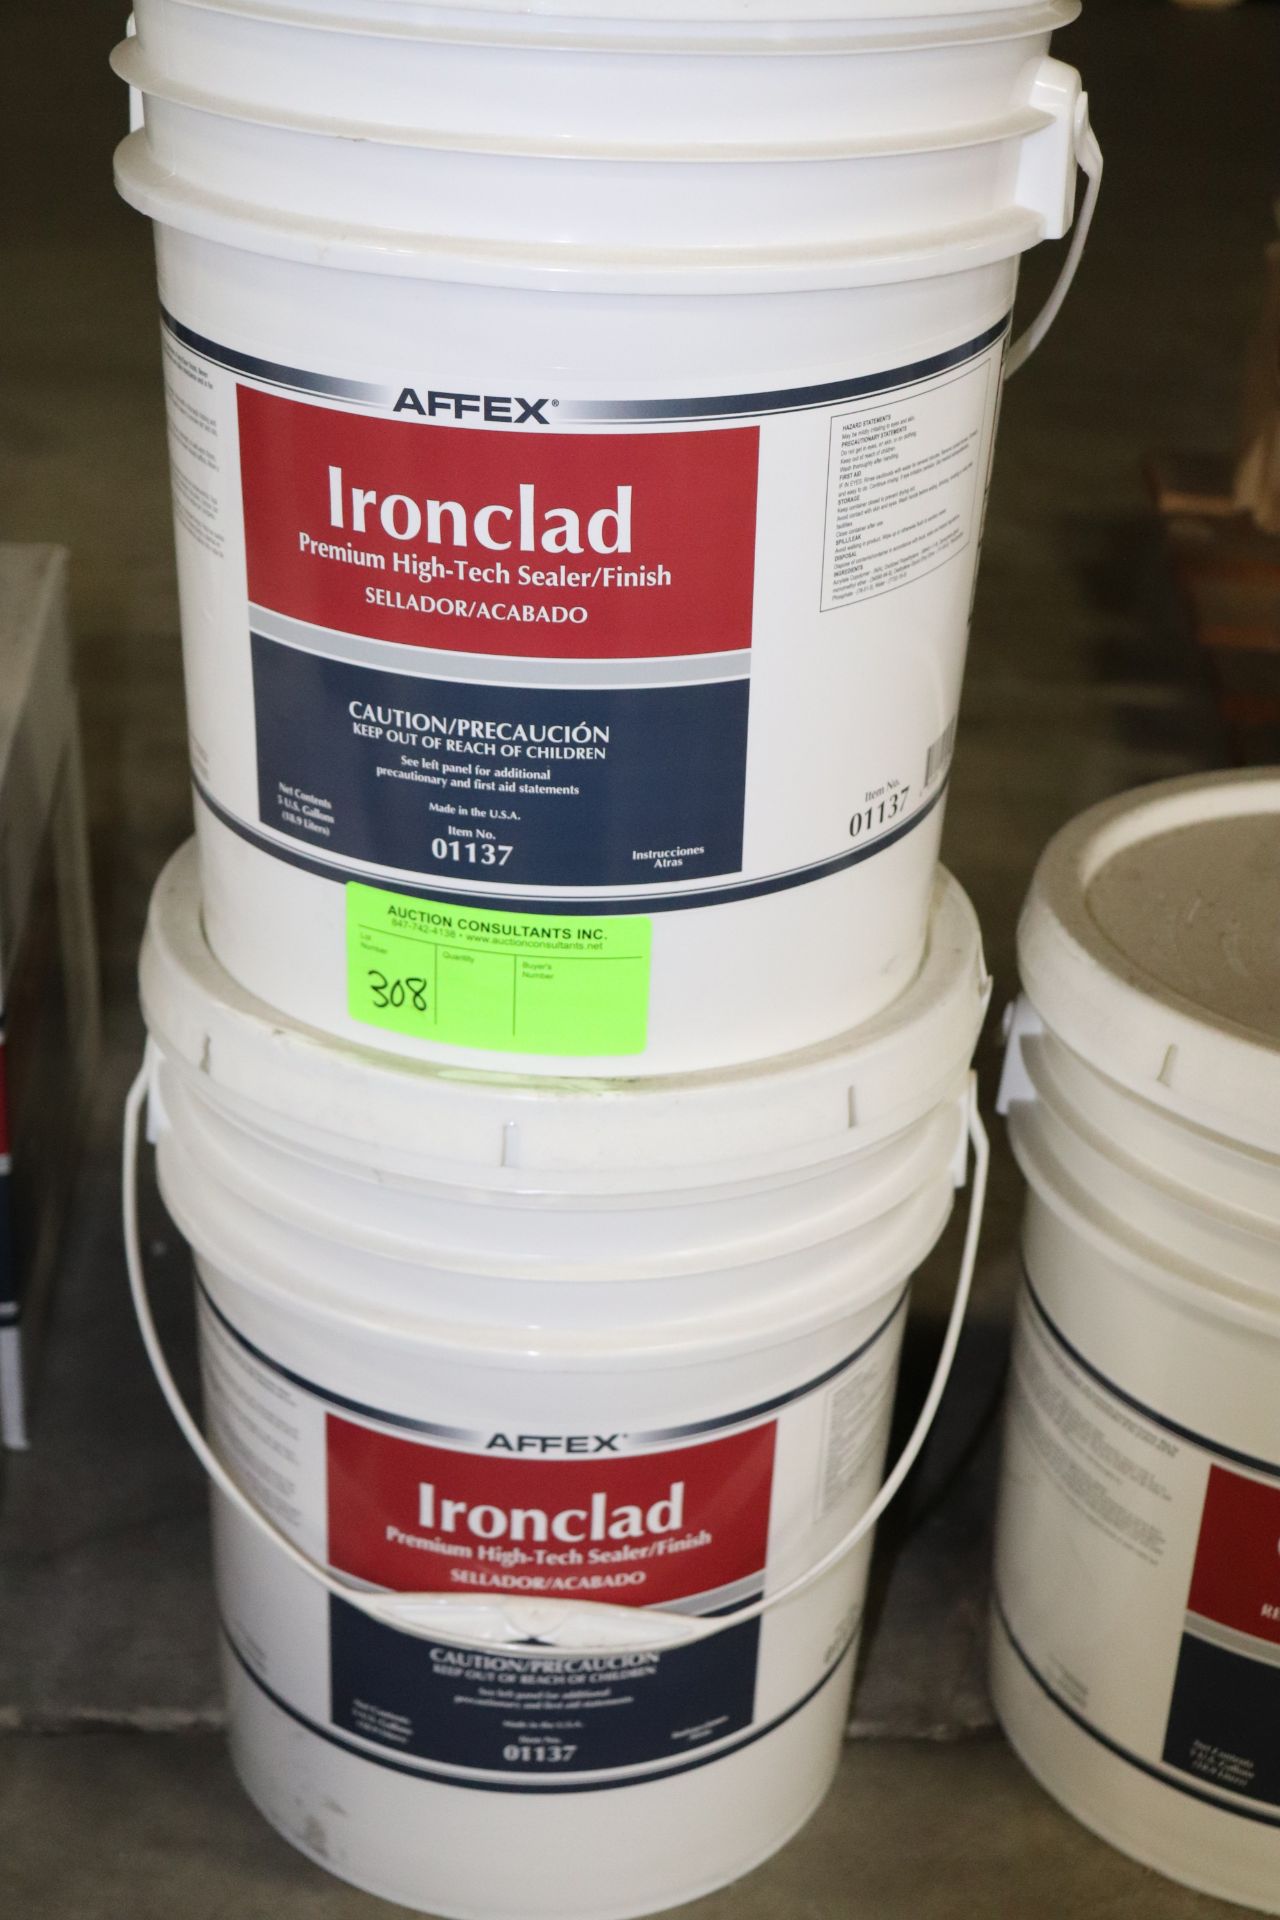 Two buckets of Iron Clad Premium High Tech sealer finish